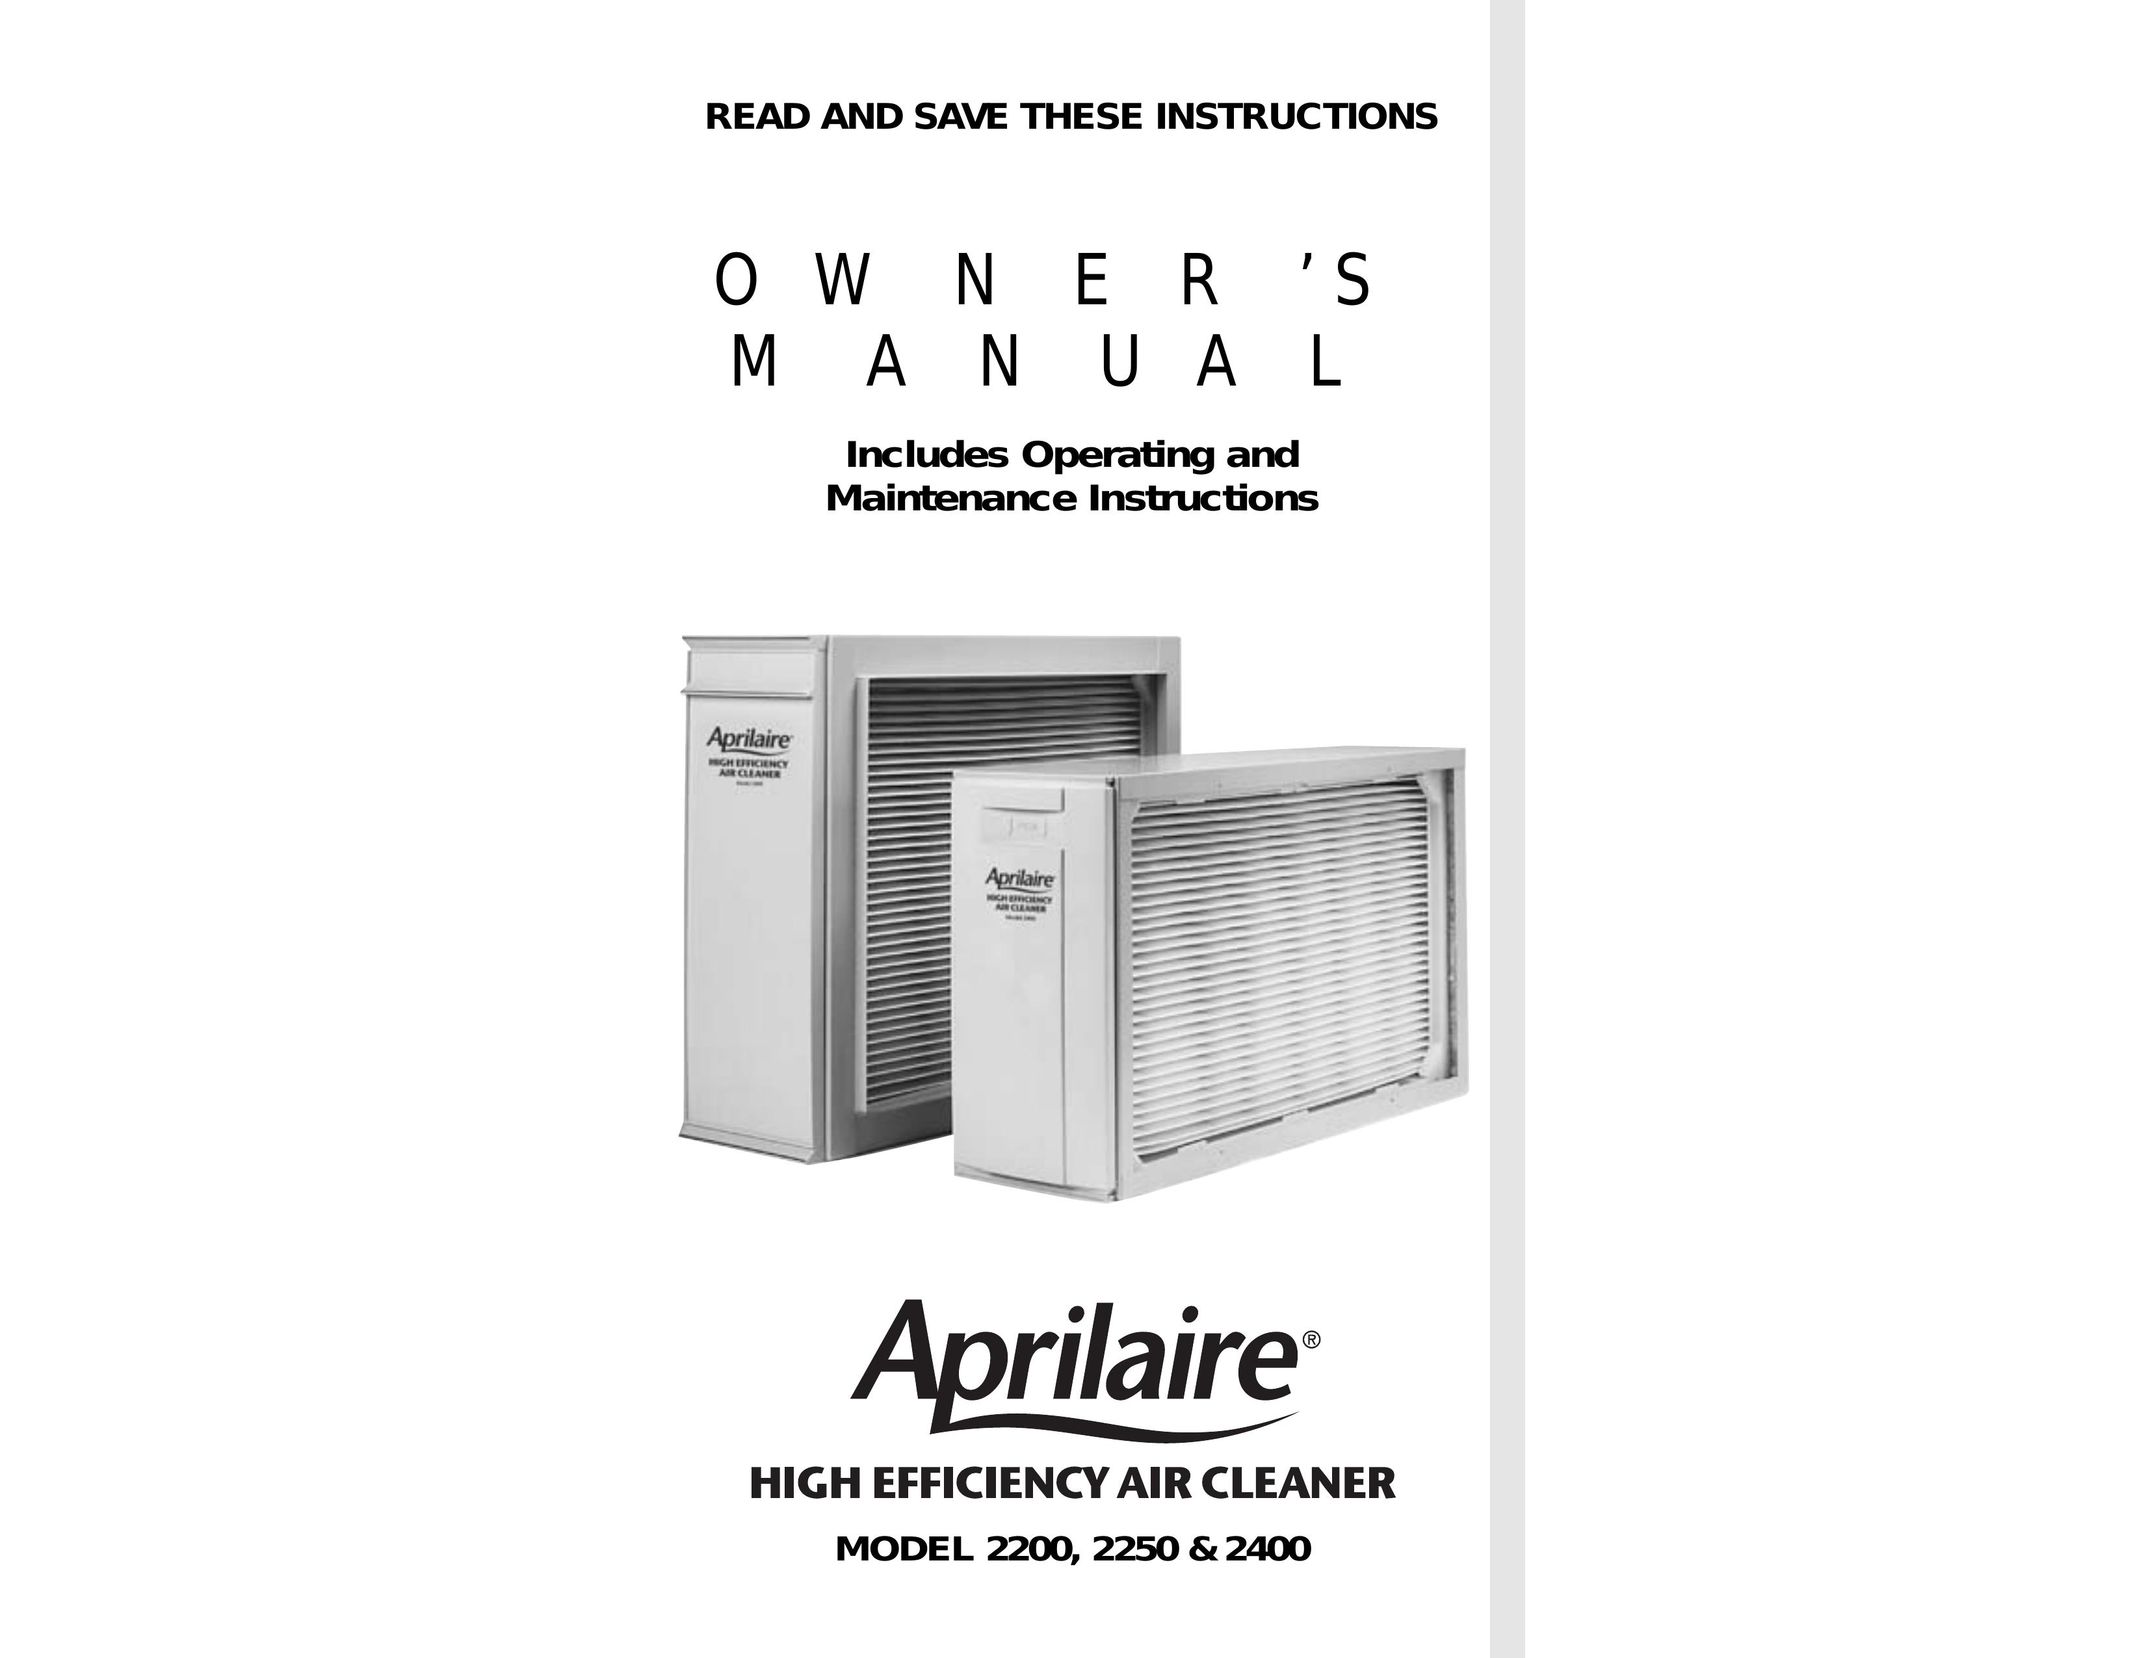 Aprilaire 2250 Air Cleaner User Manual